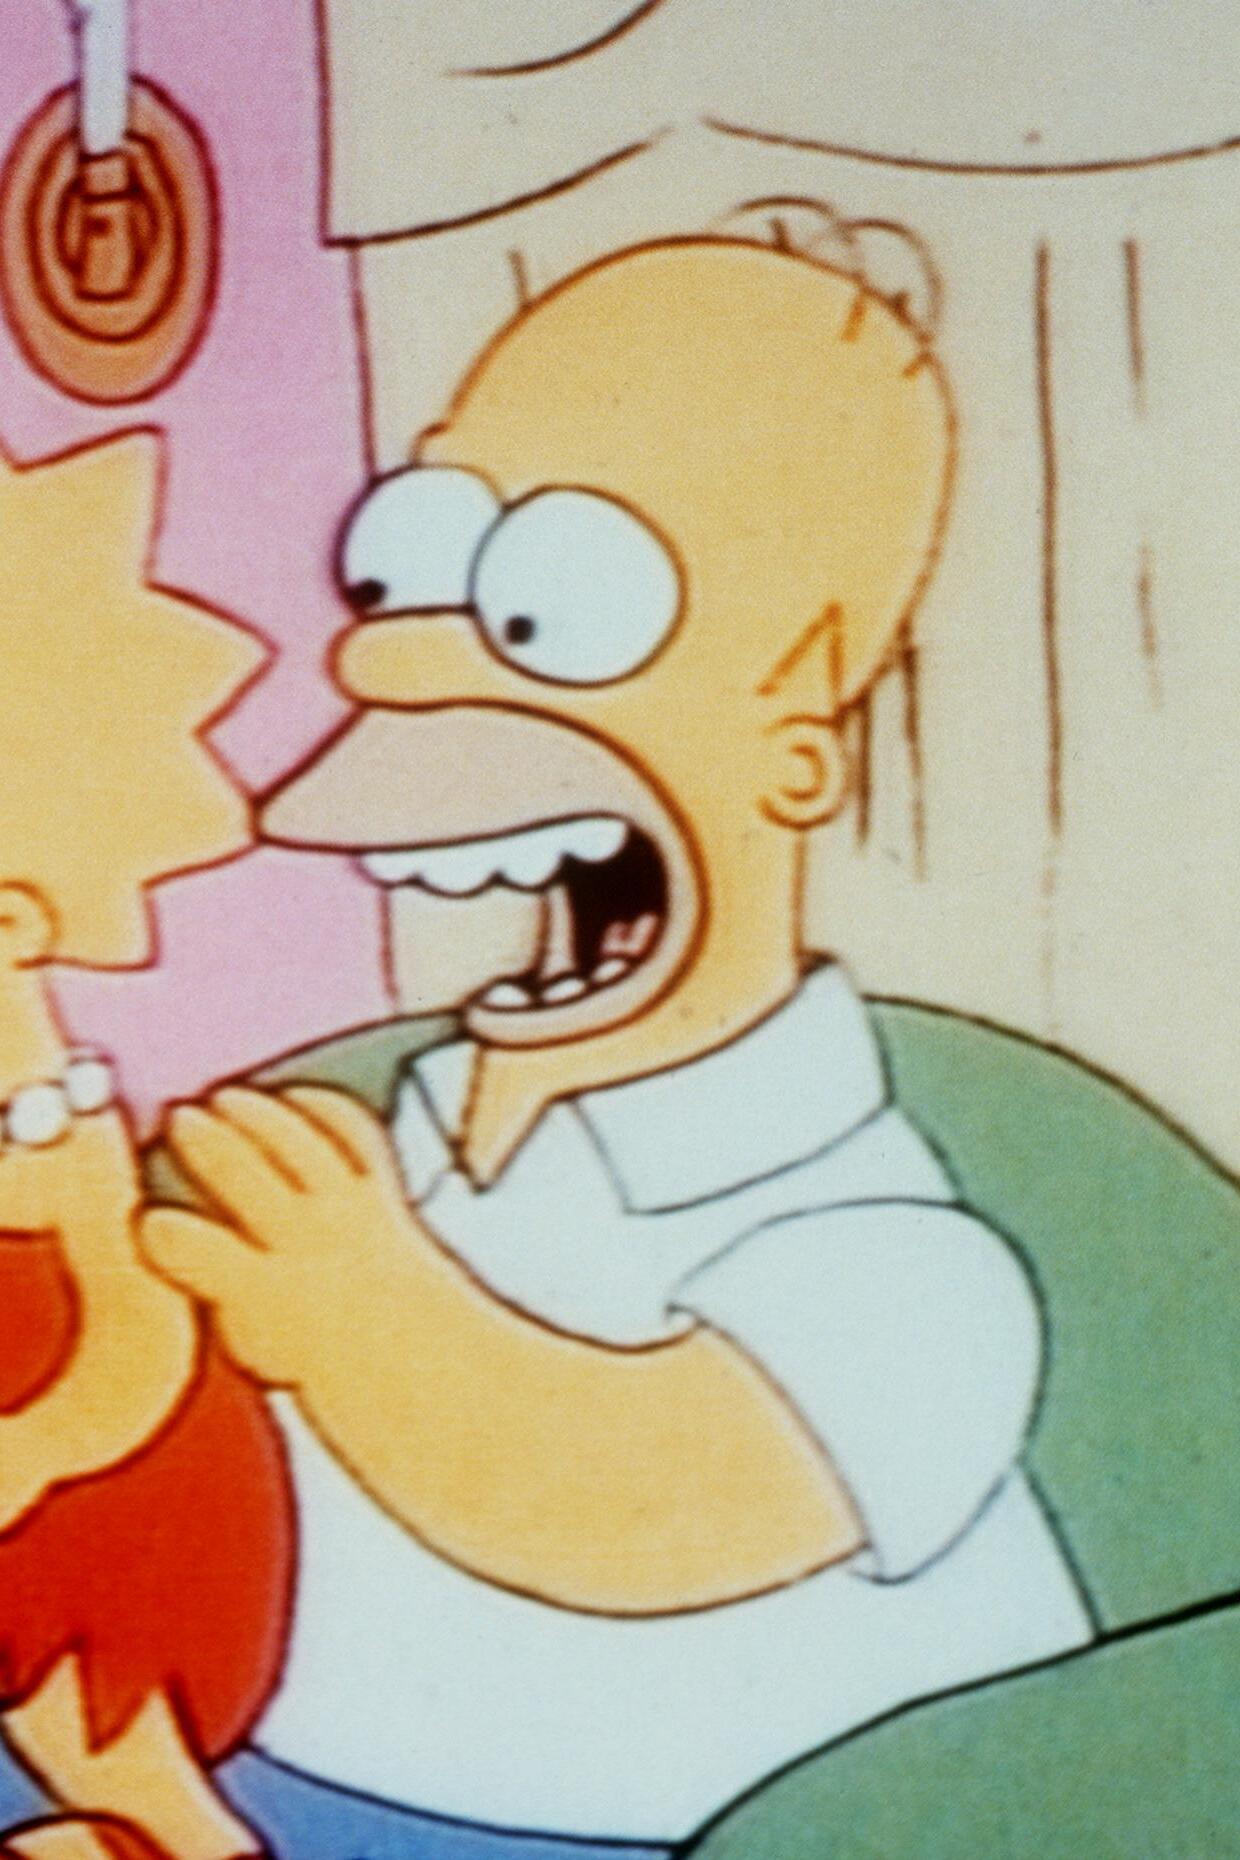 The Simpsons - Bart the Genius